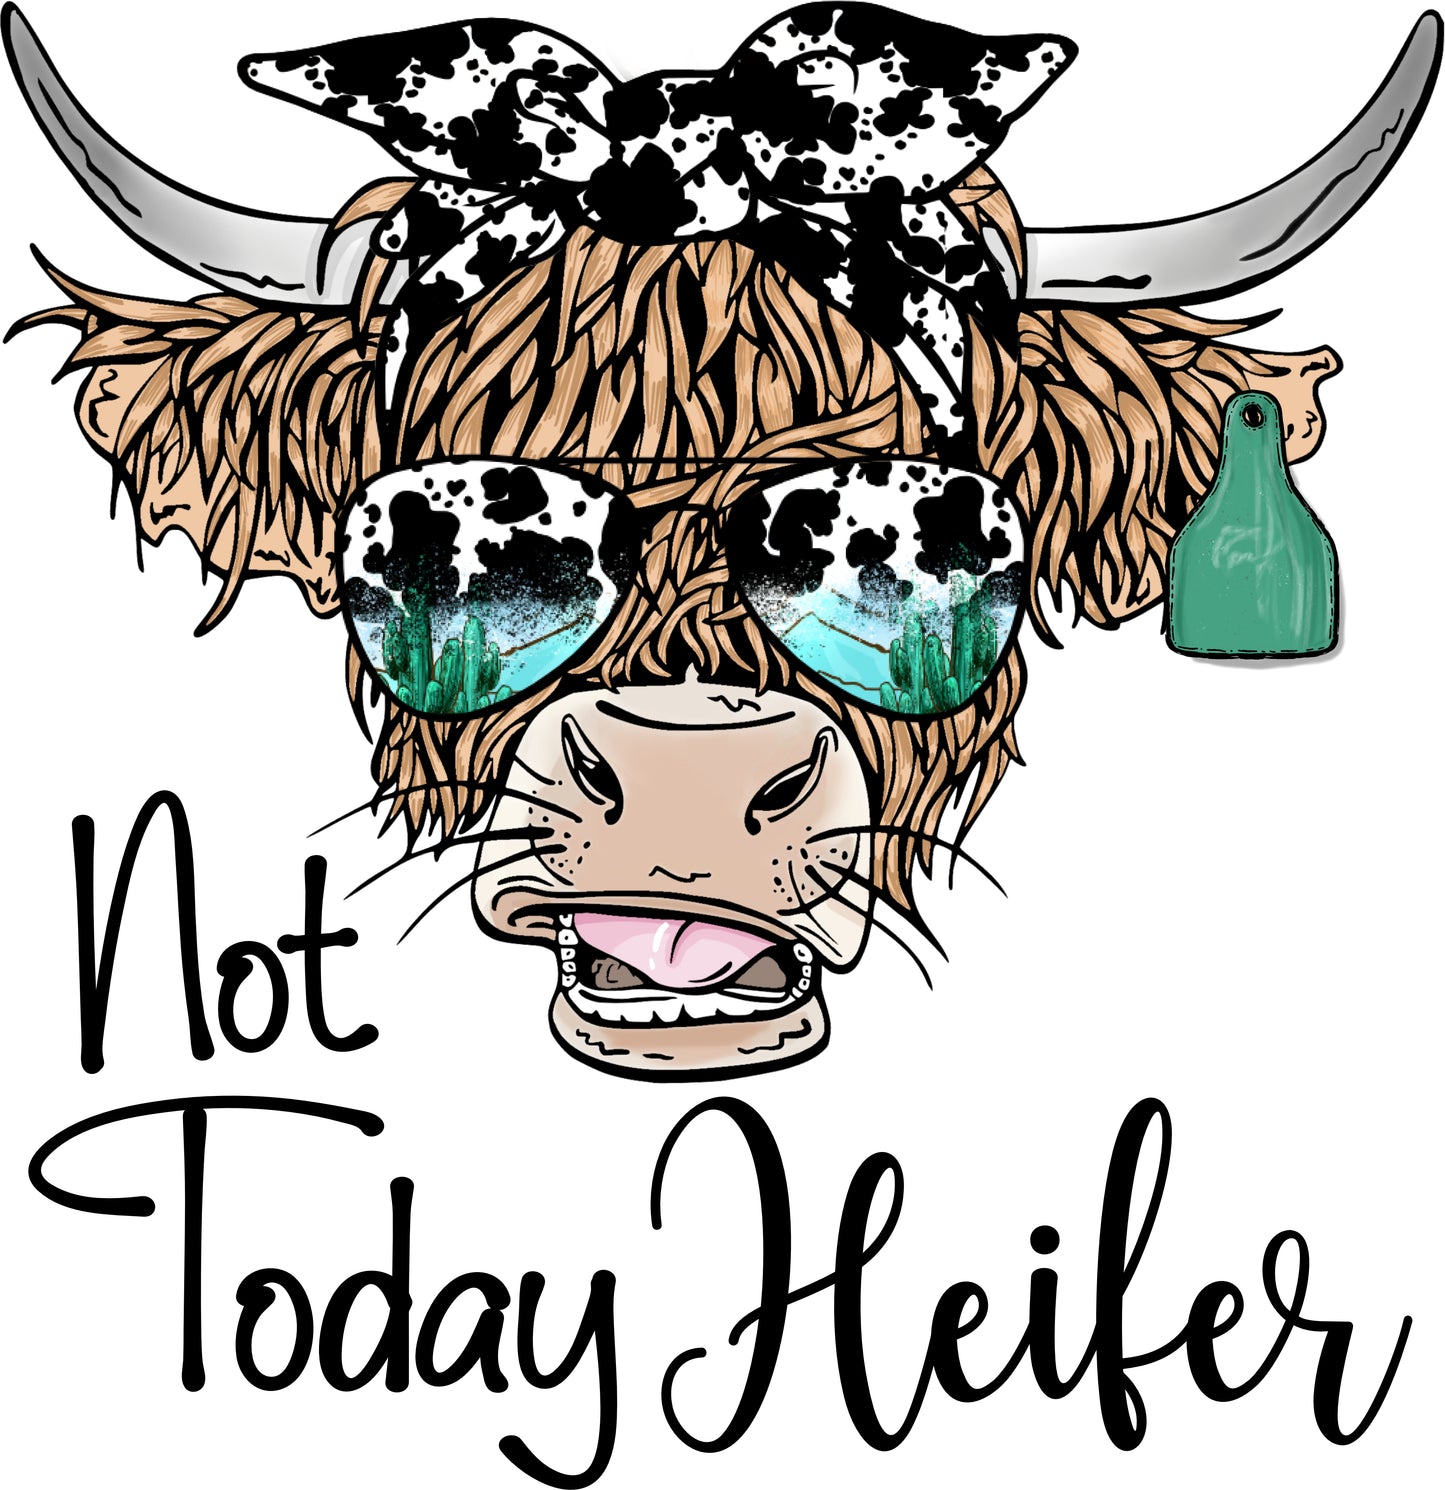 255 Not today Heifer